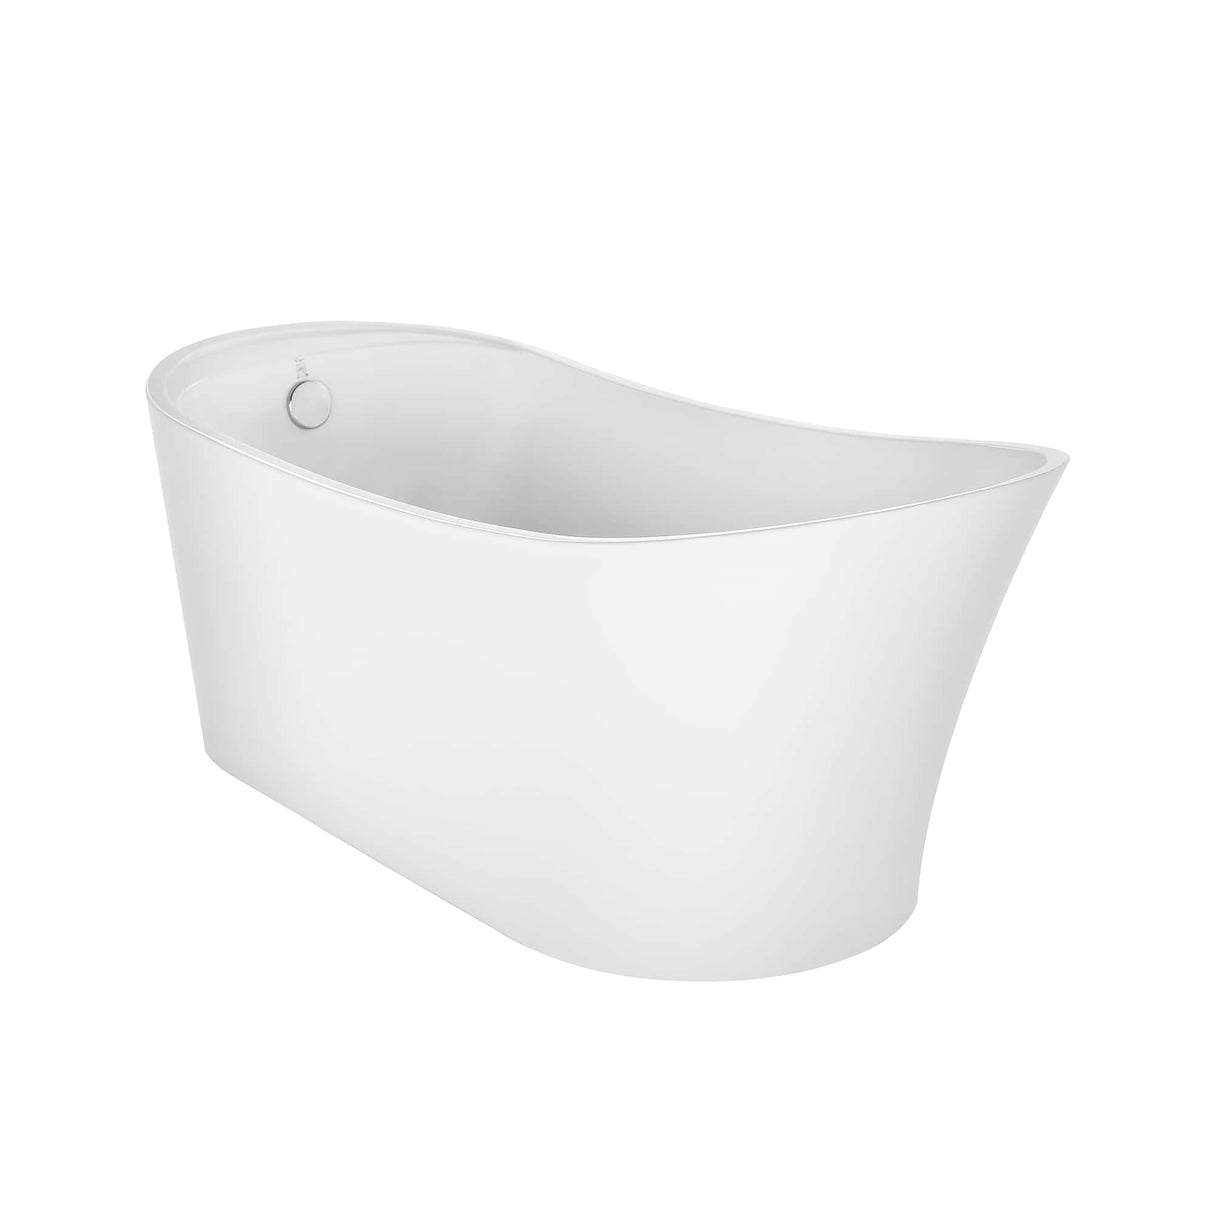 Empava-67FT1528 luxury freestanding acrylic soaking oval modern white SPA single-ended bathtub over flow